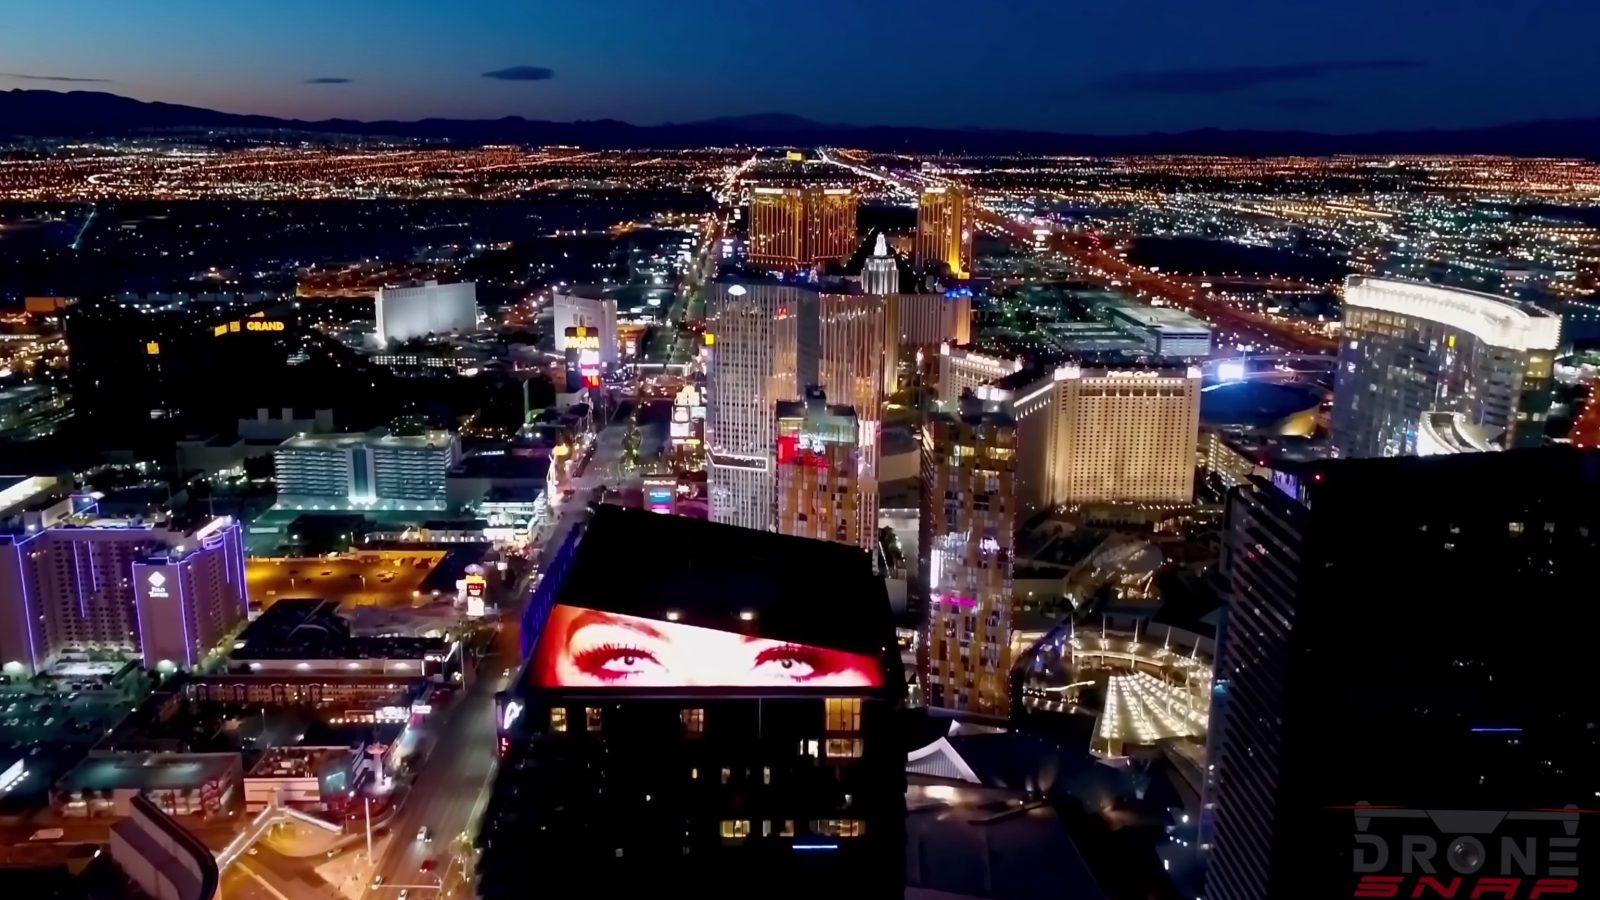 DroneRise - DJI Mavic Pro captures Las Vegas at night